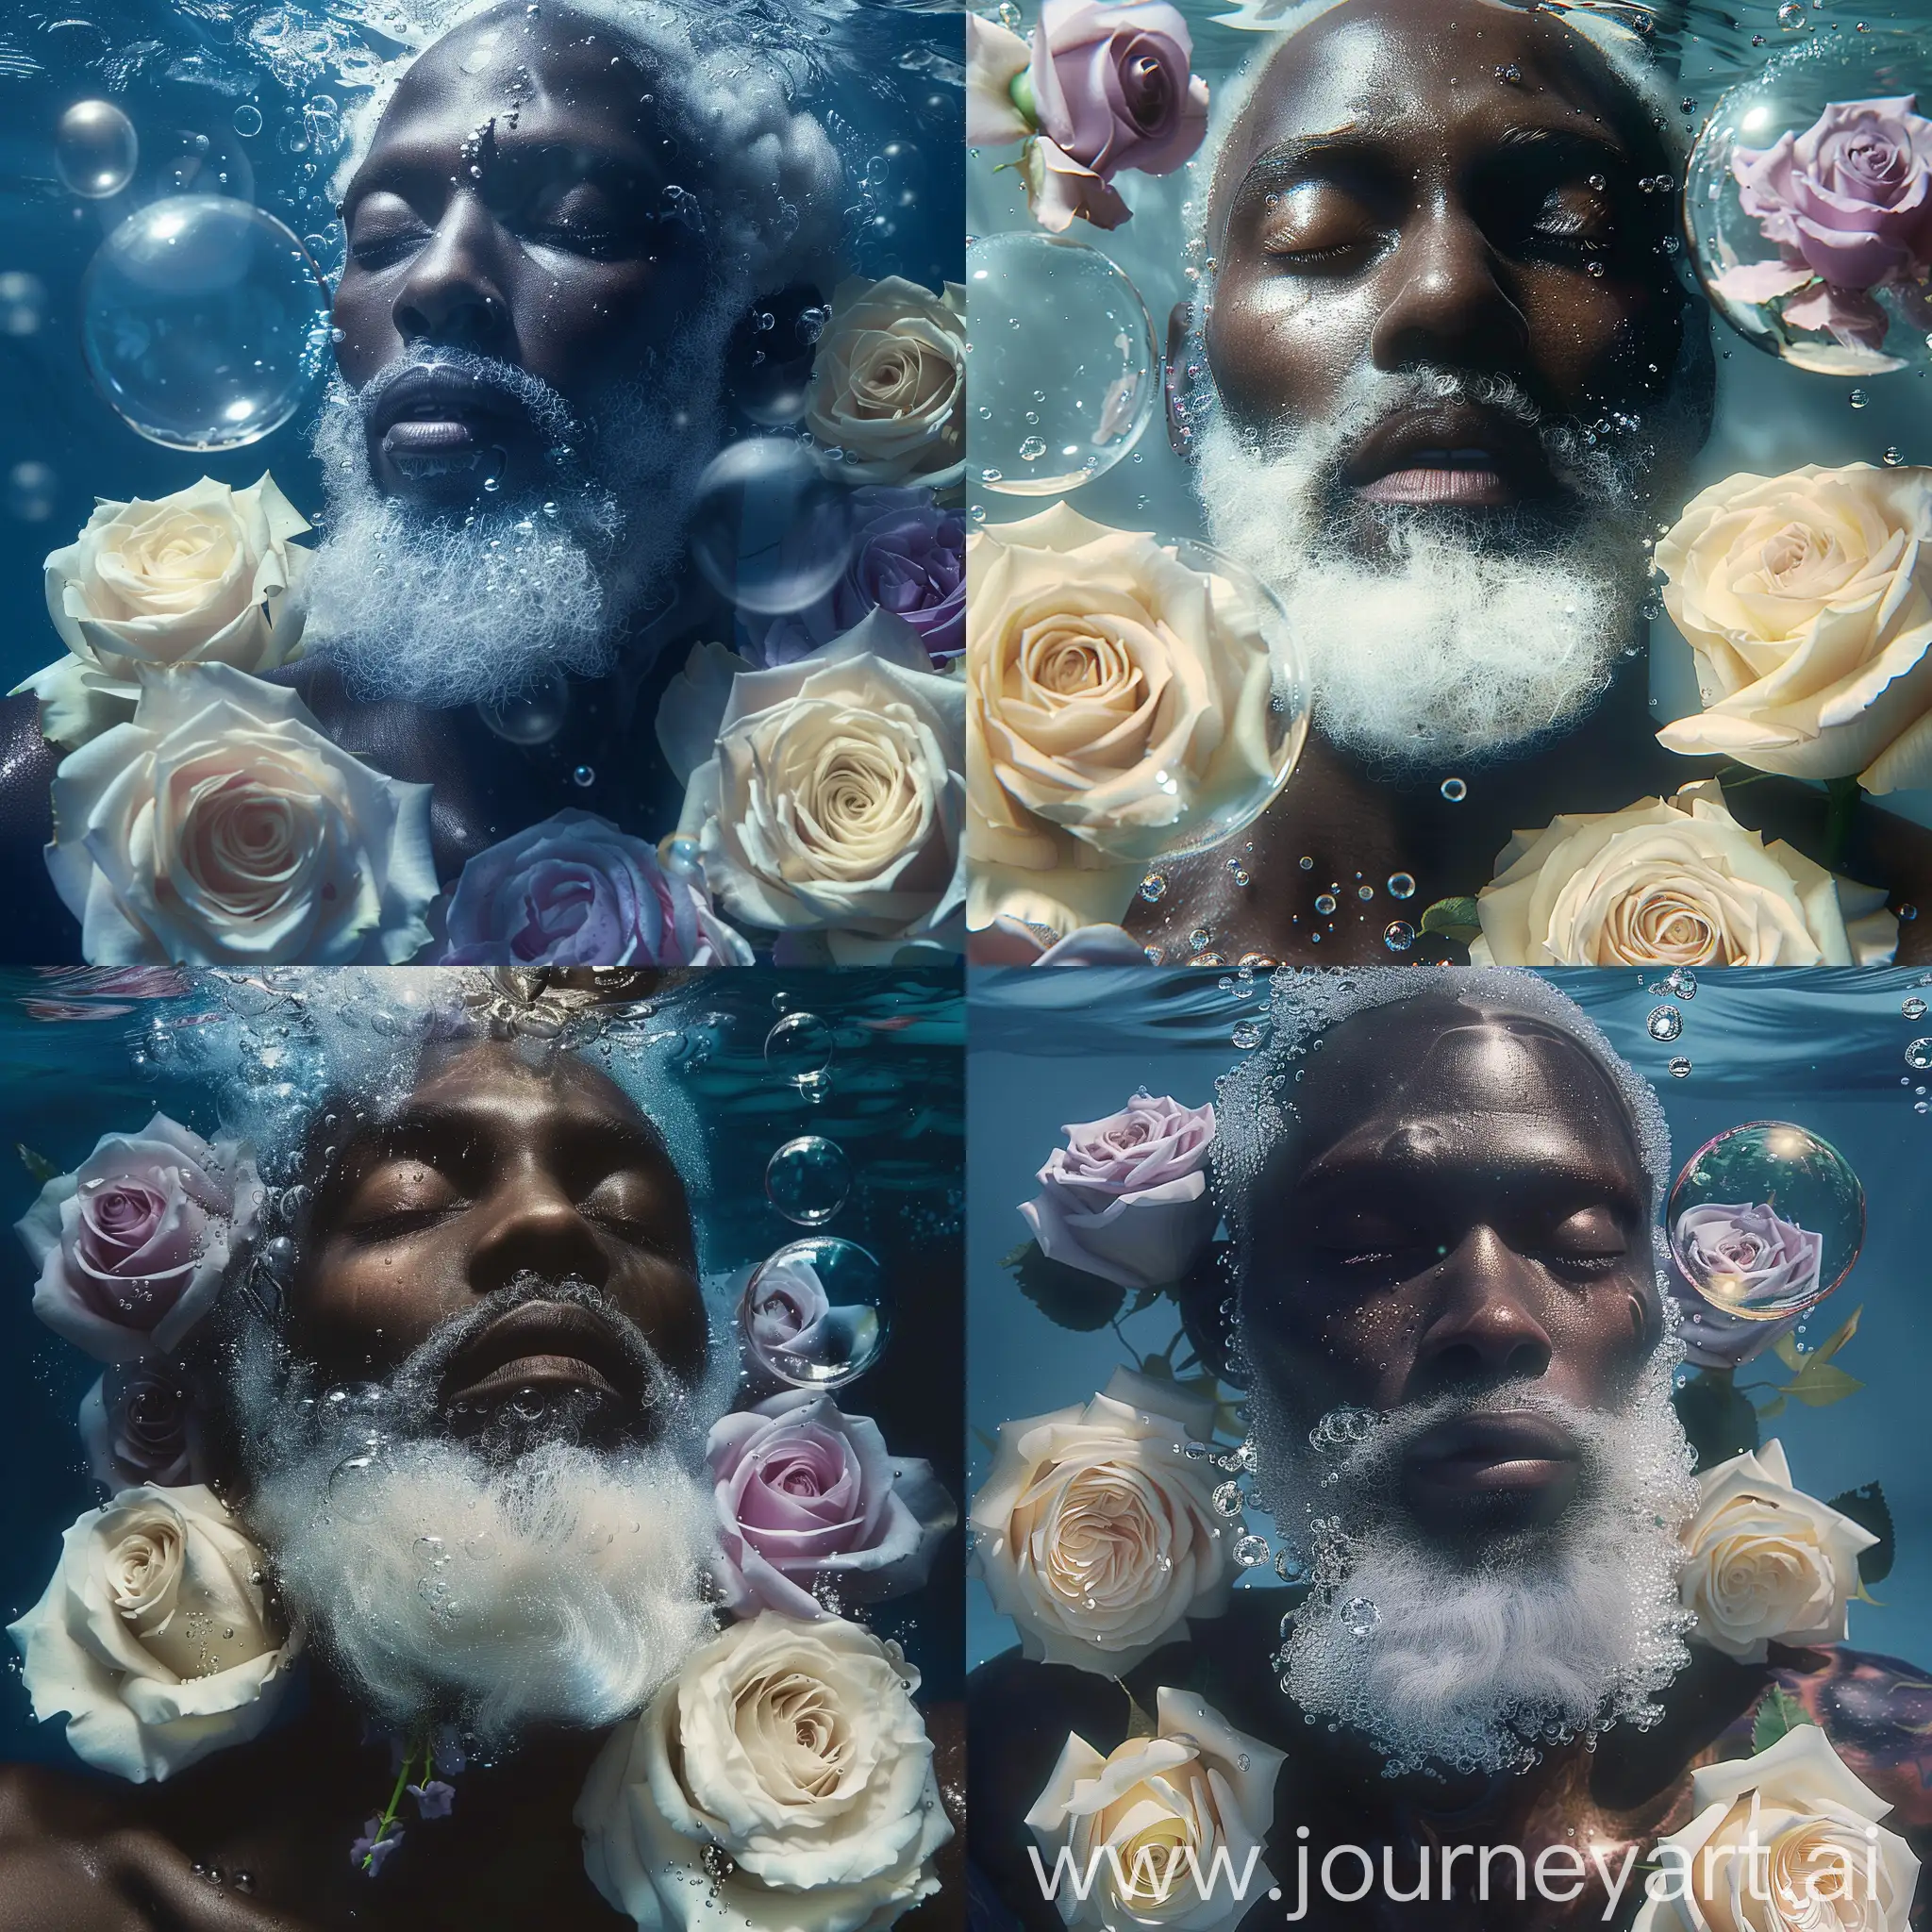 Serene-Black-Man-with-White-Beard-Submerged-in-Floral-Underwater-Scene